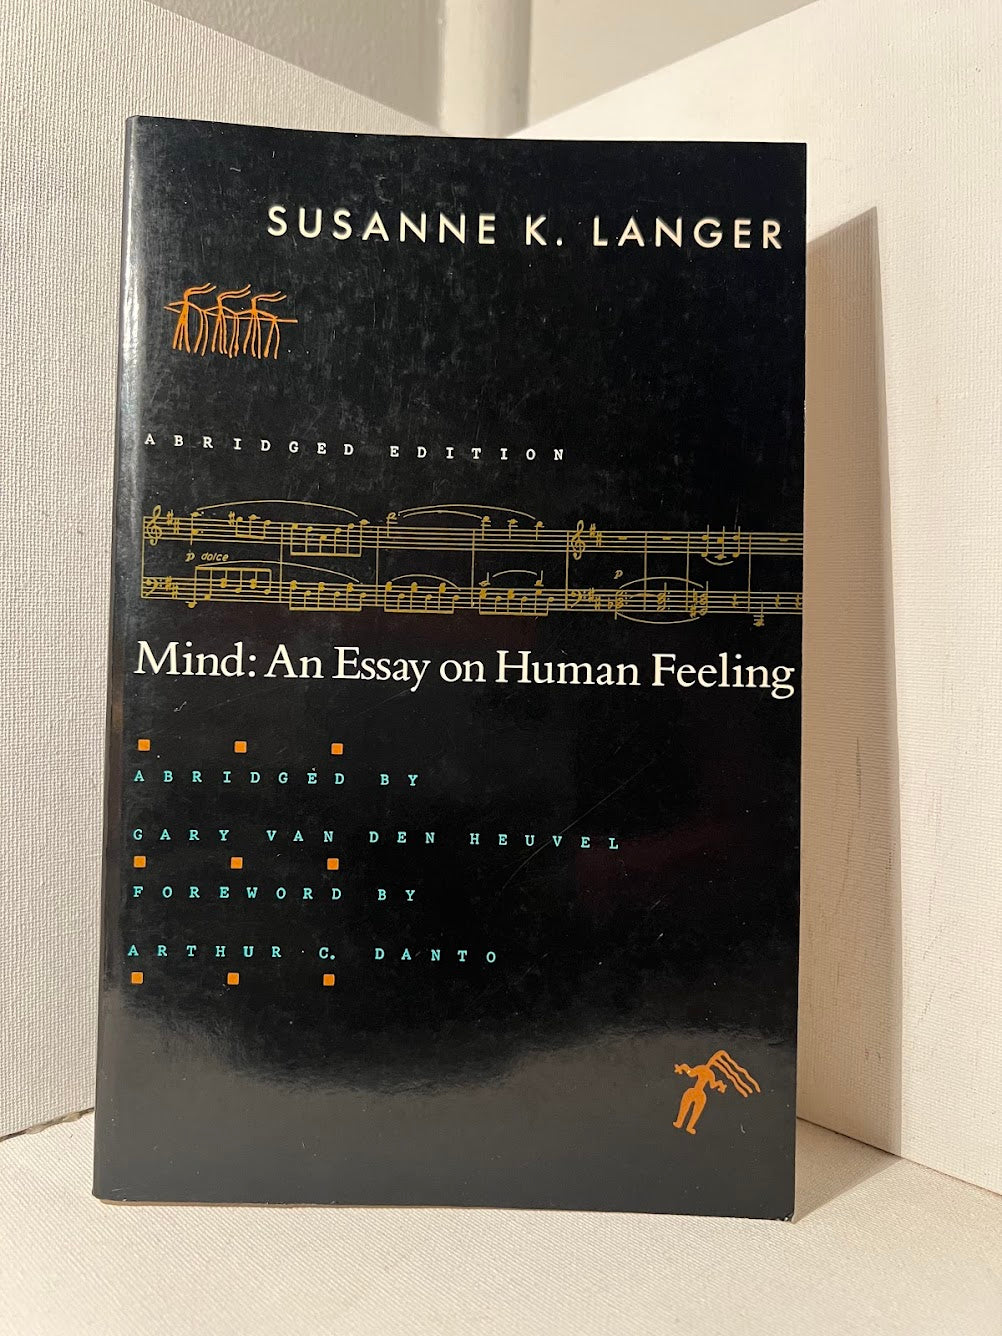 Mind: An Essay on Human Feeling by Susanne K. Langer